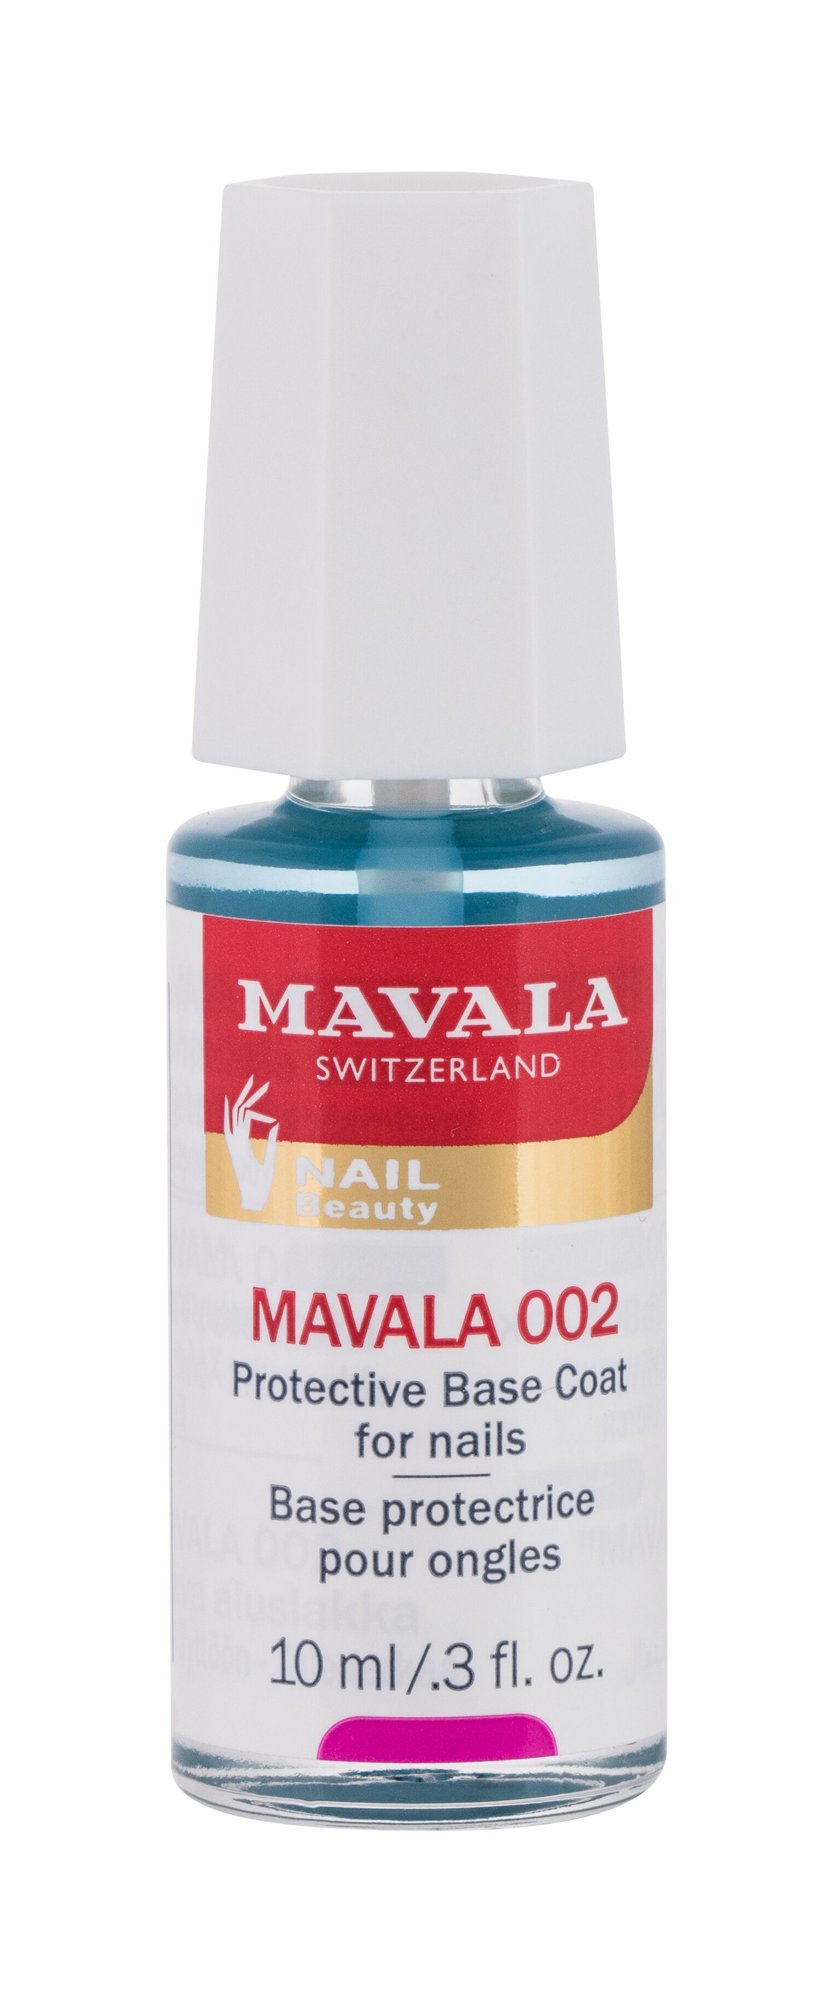 MAVALA Nail Beauty Mavala 002 nagų priežiūrai